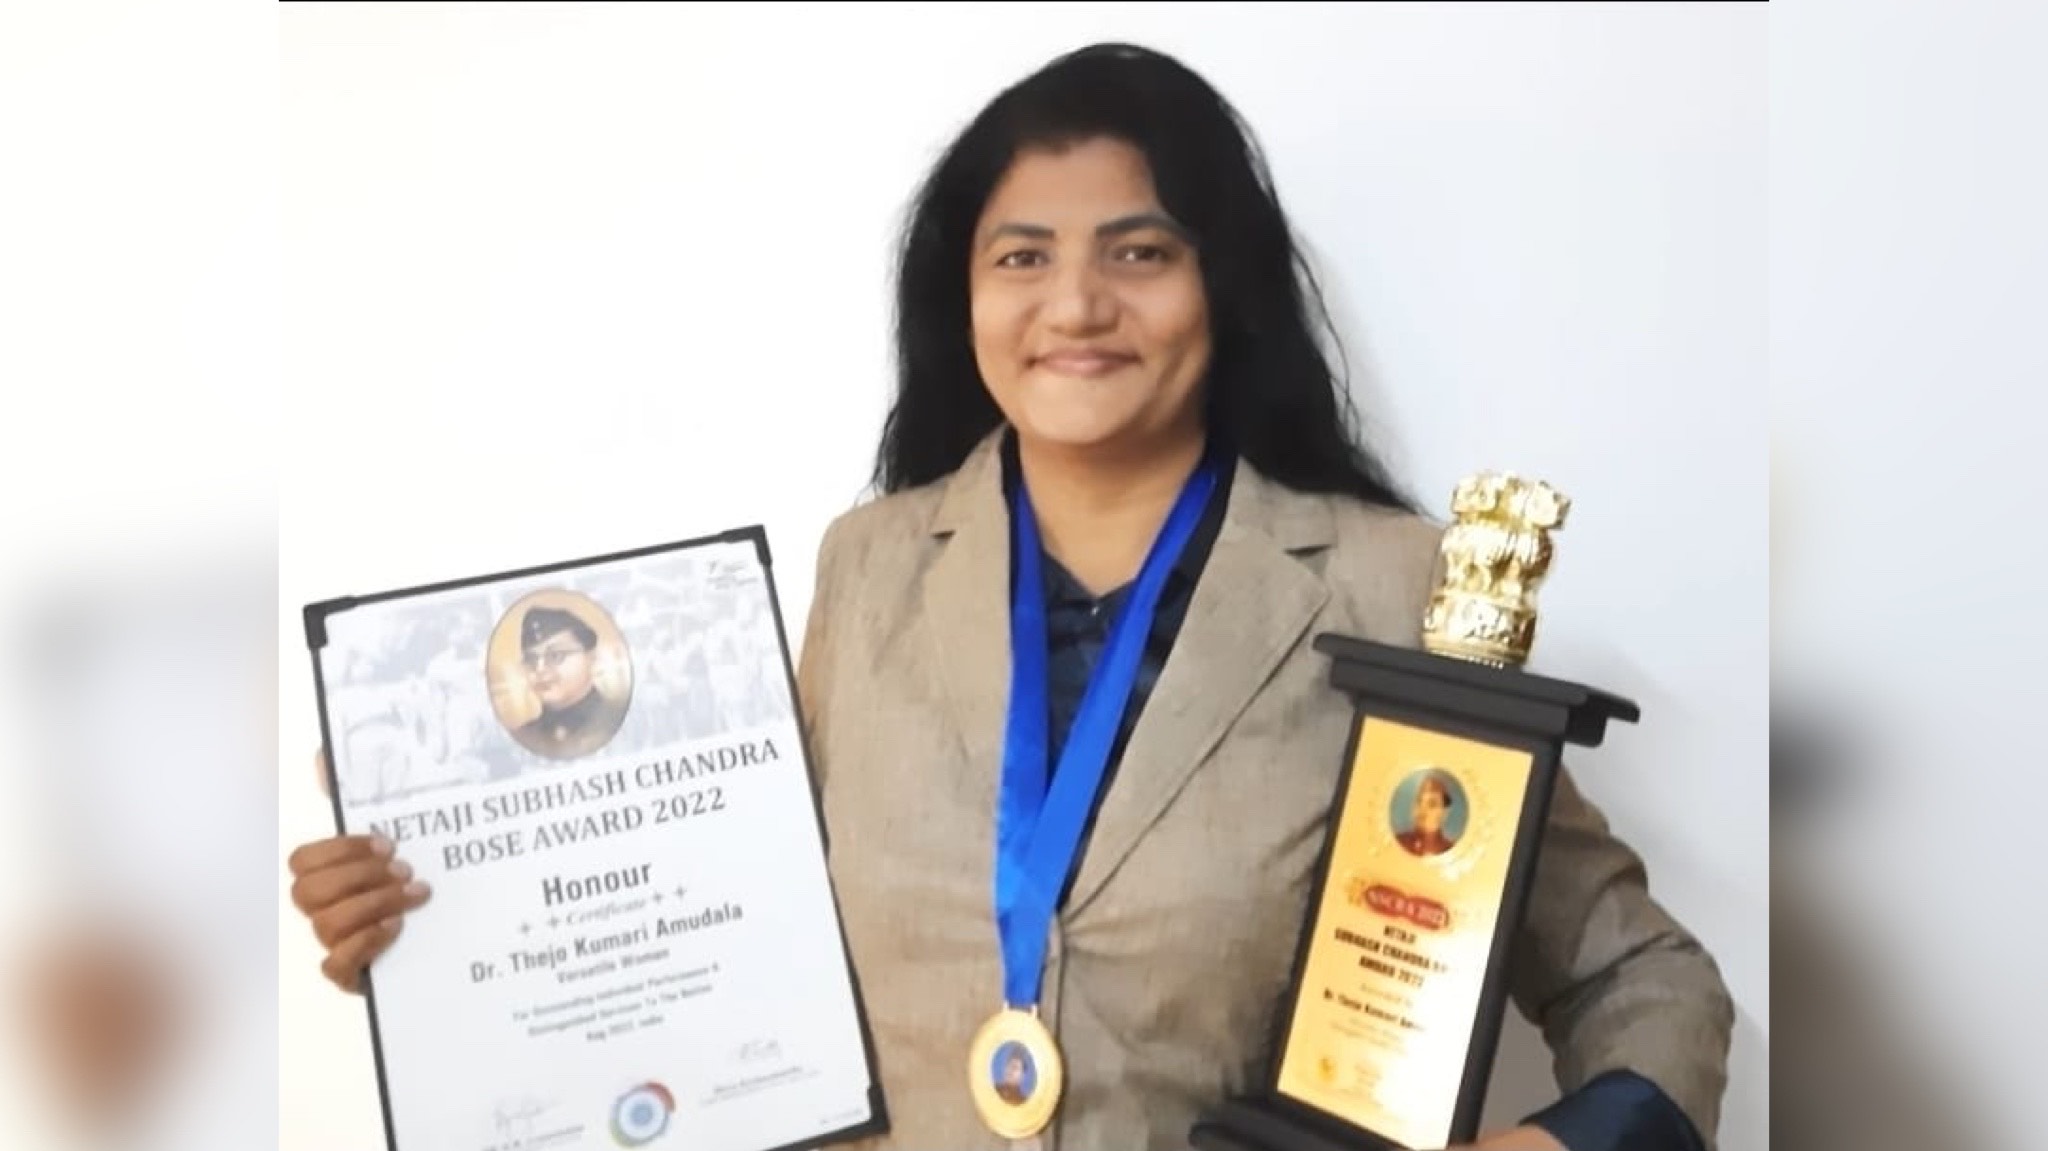 The Global Iron Lady Dr. Thejo Kumari Amudala